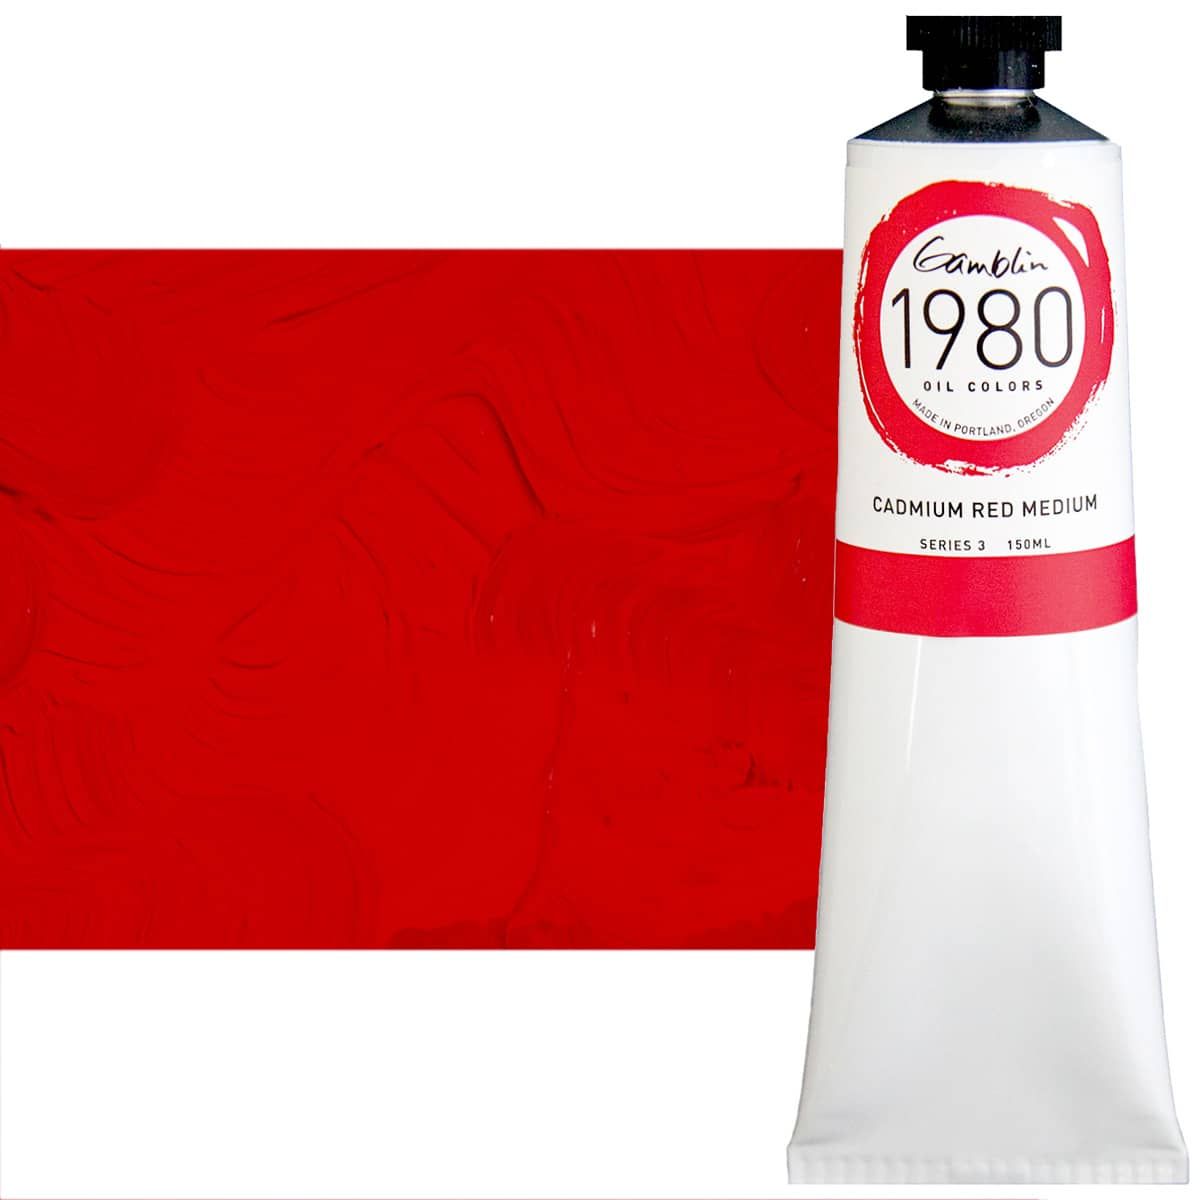 Gamblin 1980 Oil Colors - Cadmium Red Medium, 150ml Tube